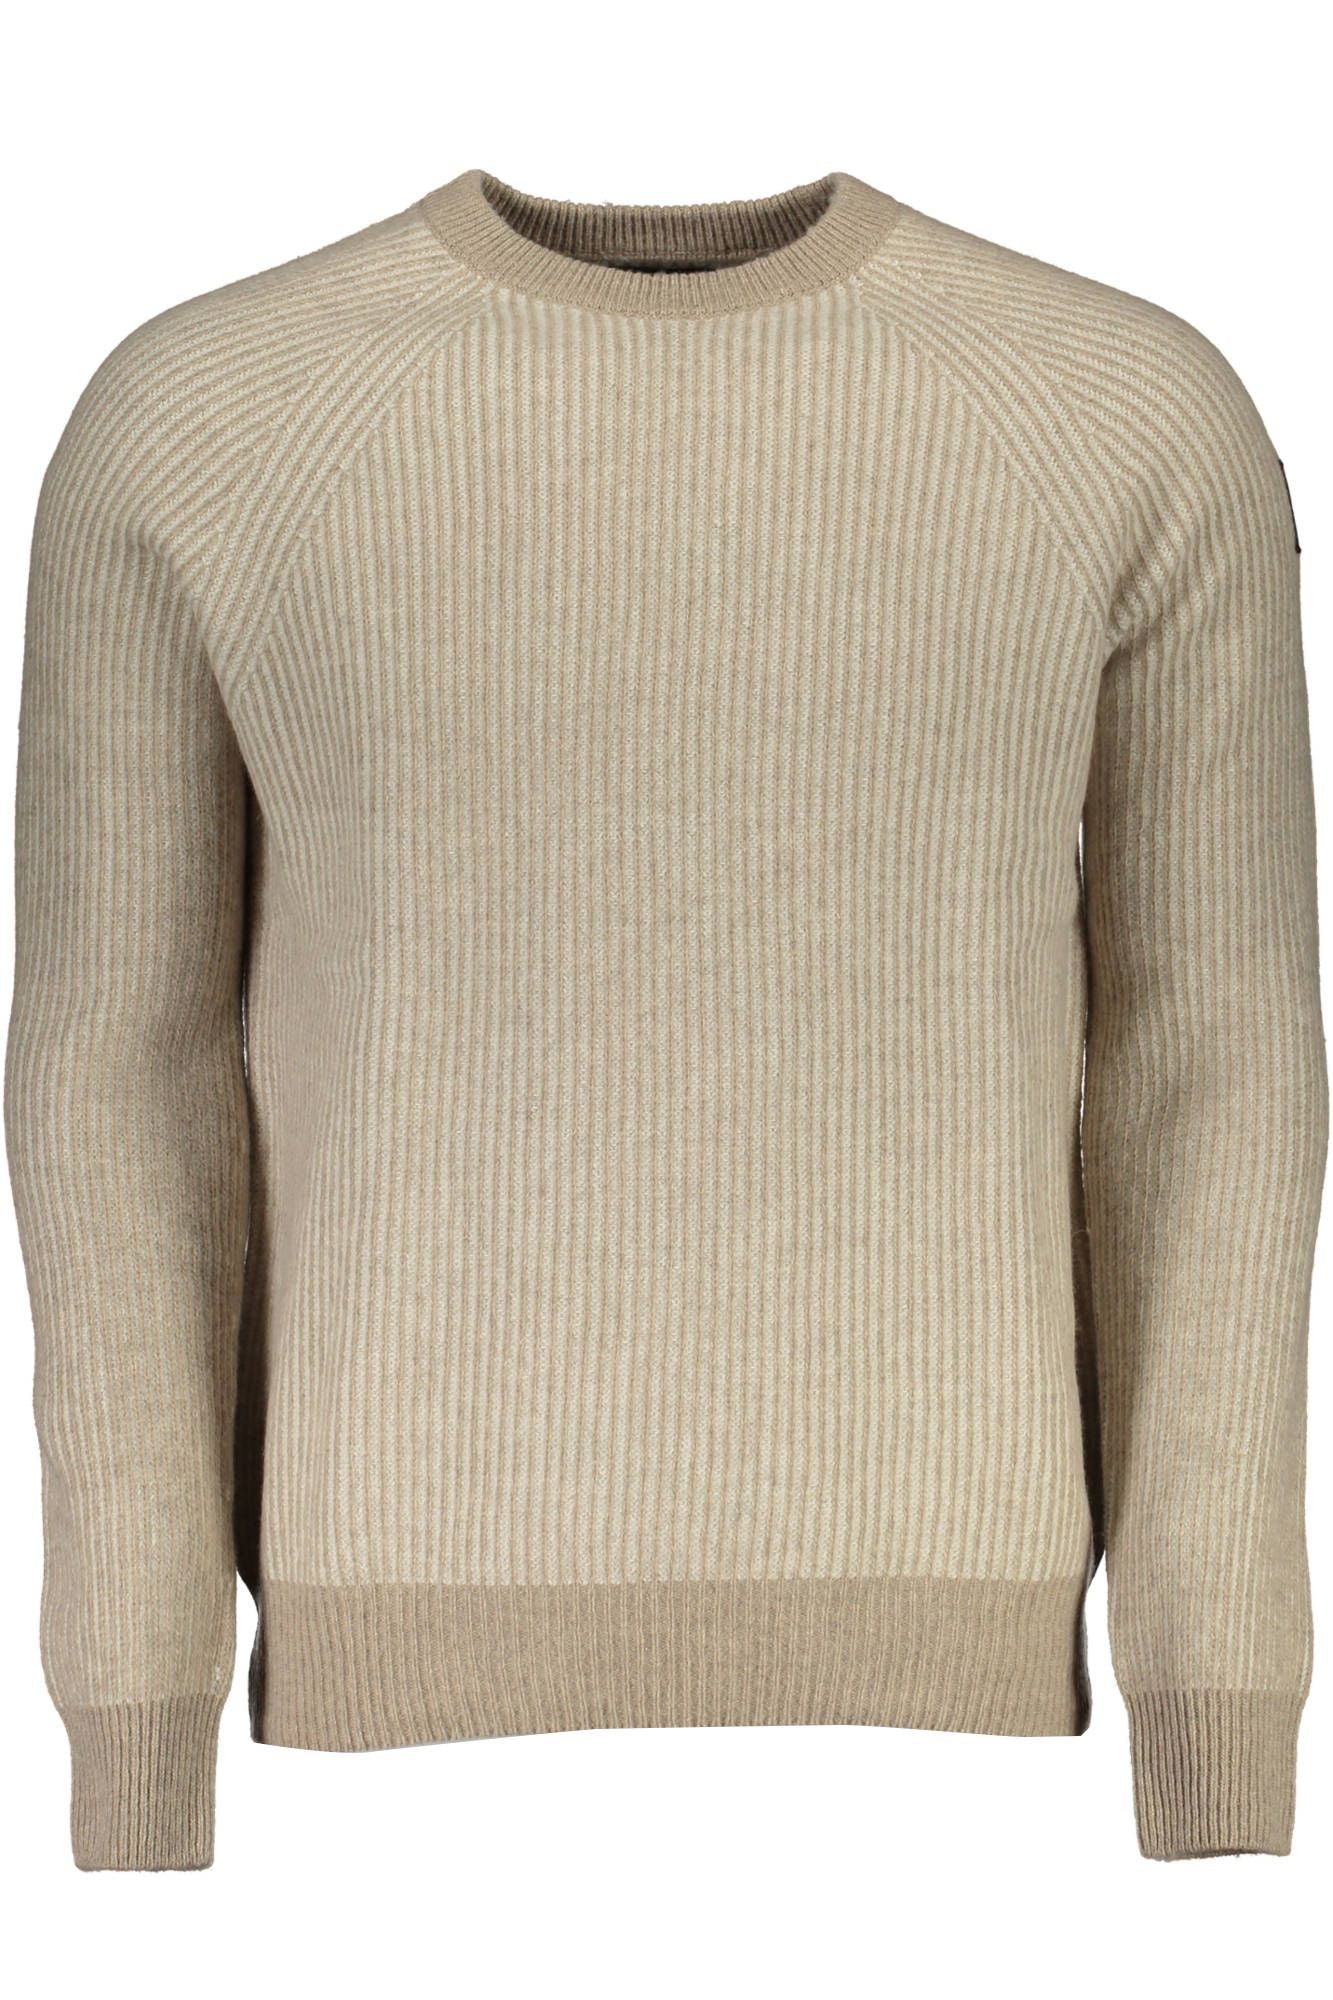 North Sails Eco-Conscious Beige Woolen Sweater